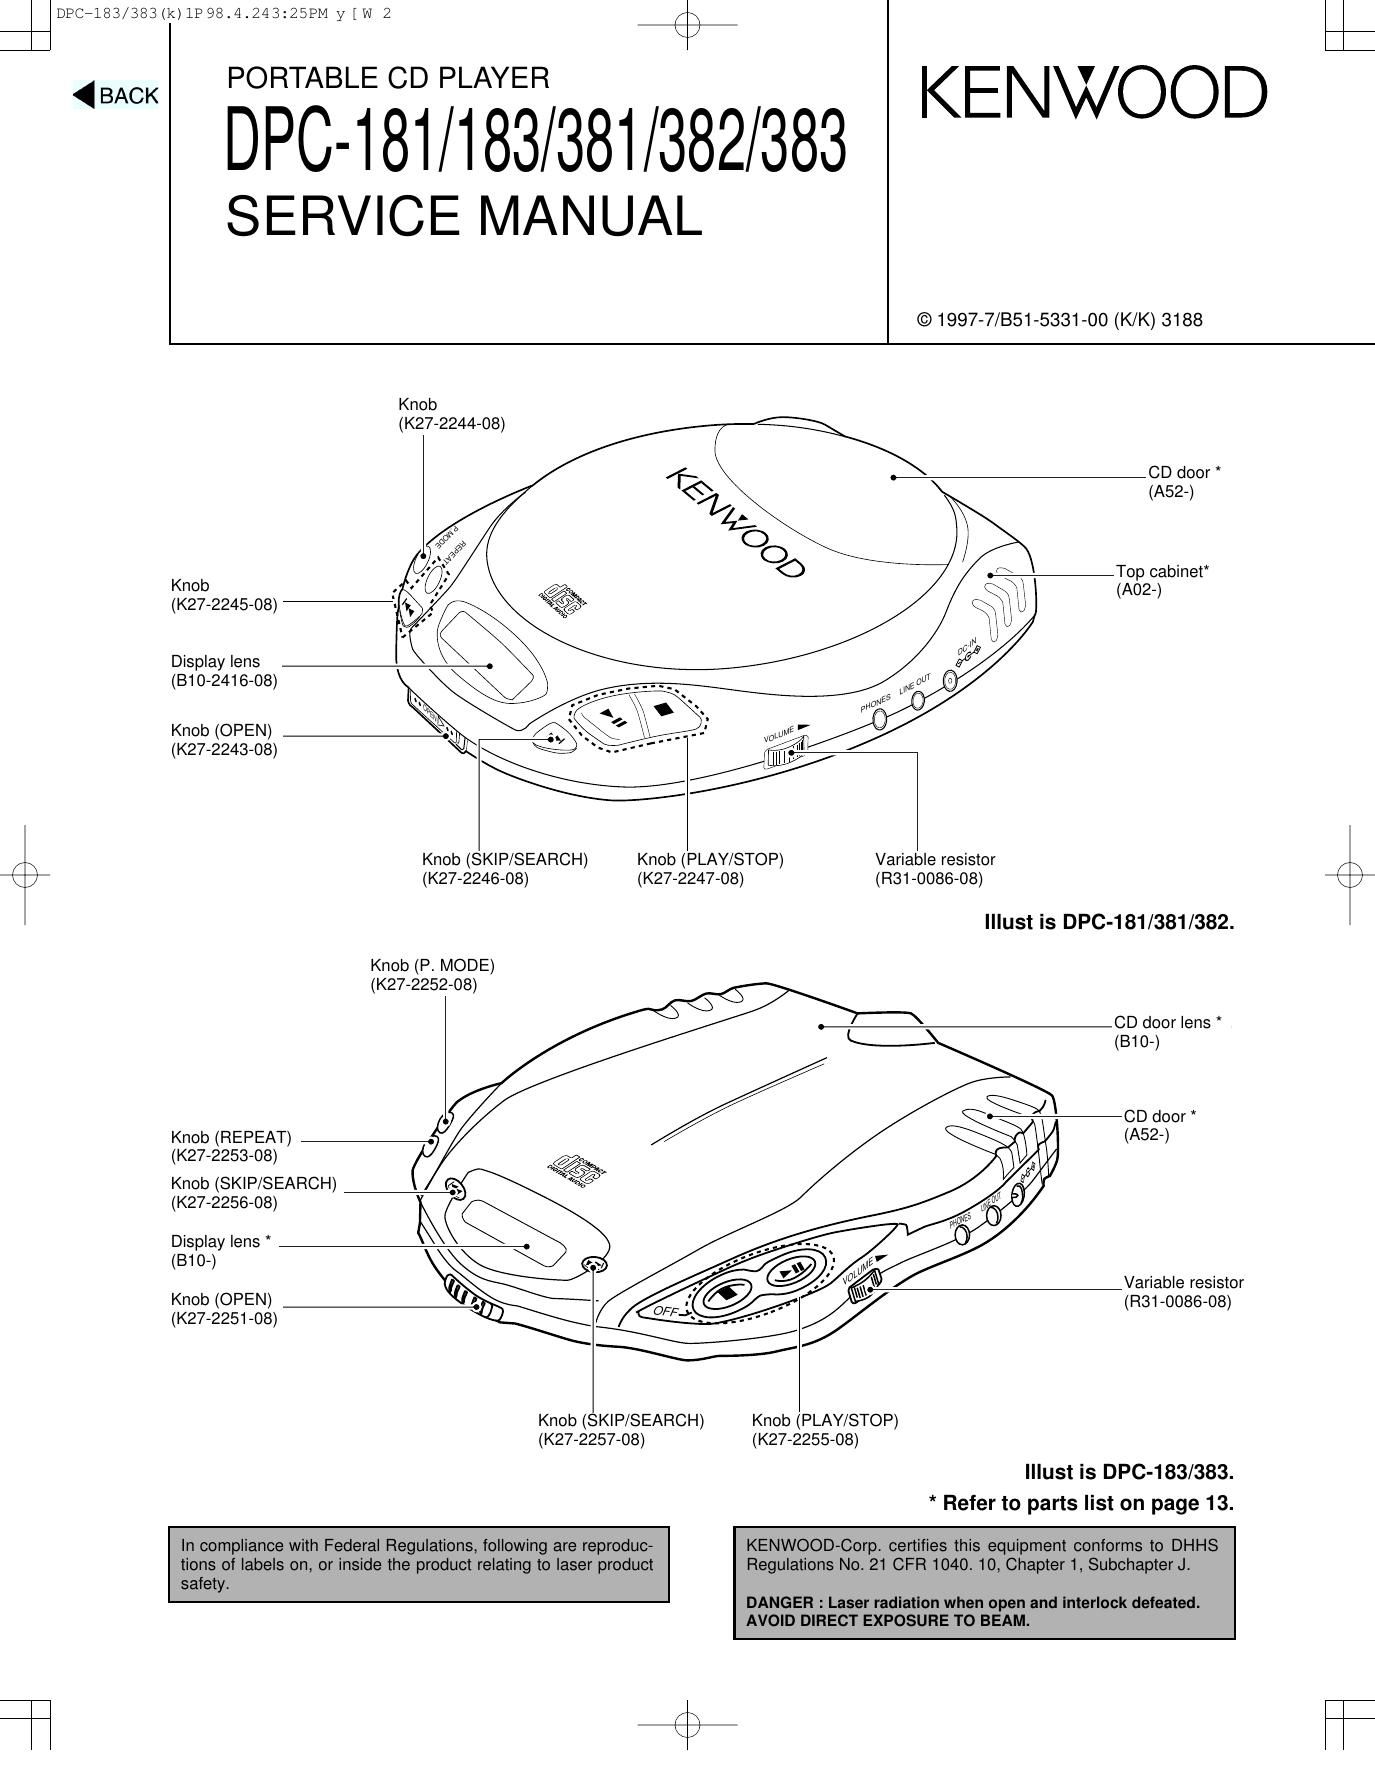 Kenwood DPC 181 Service Manual